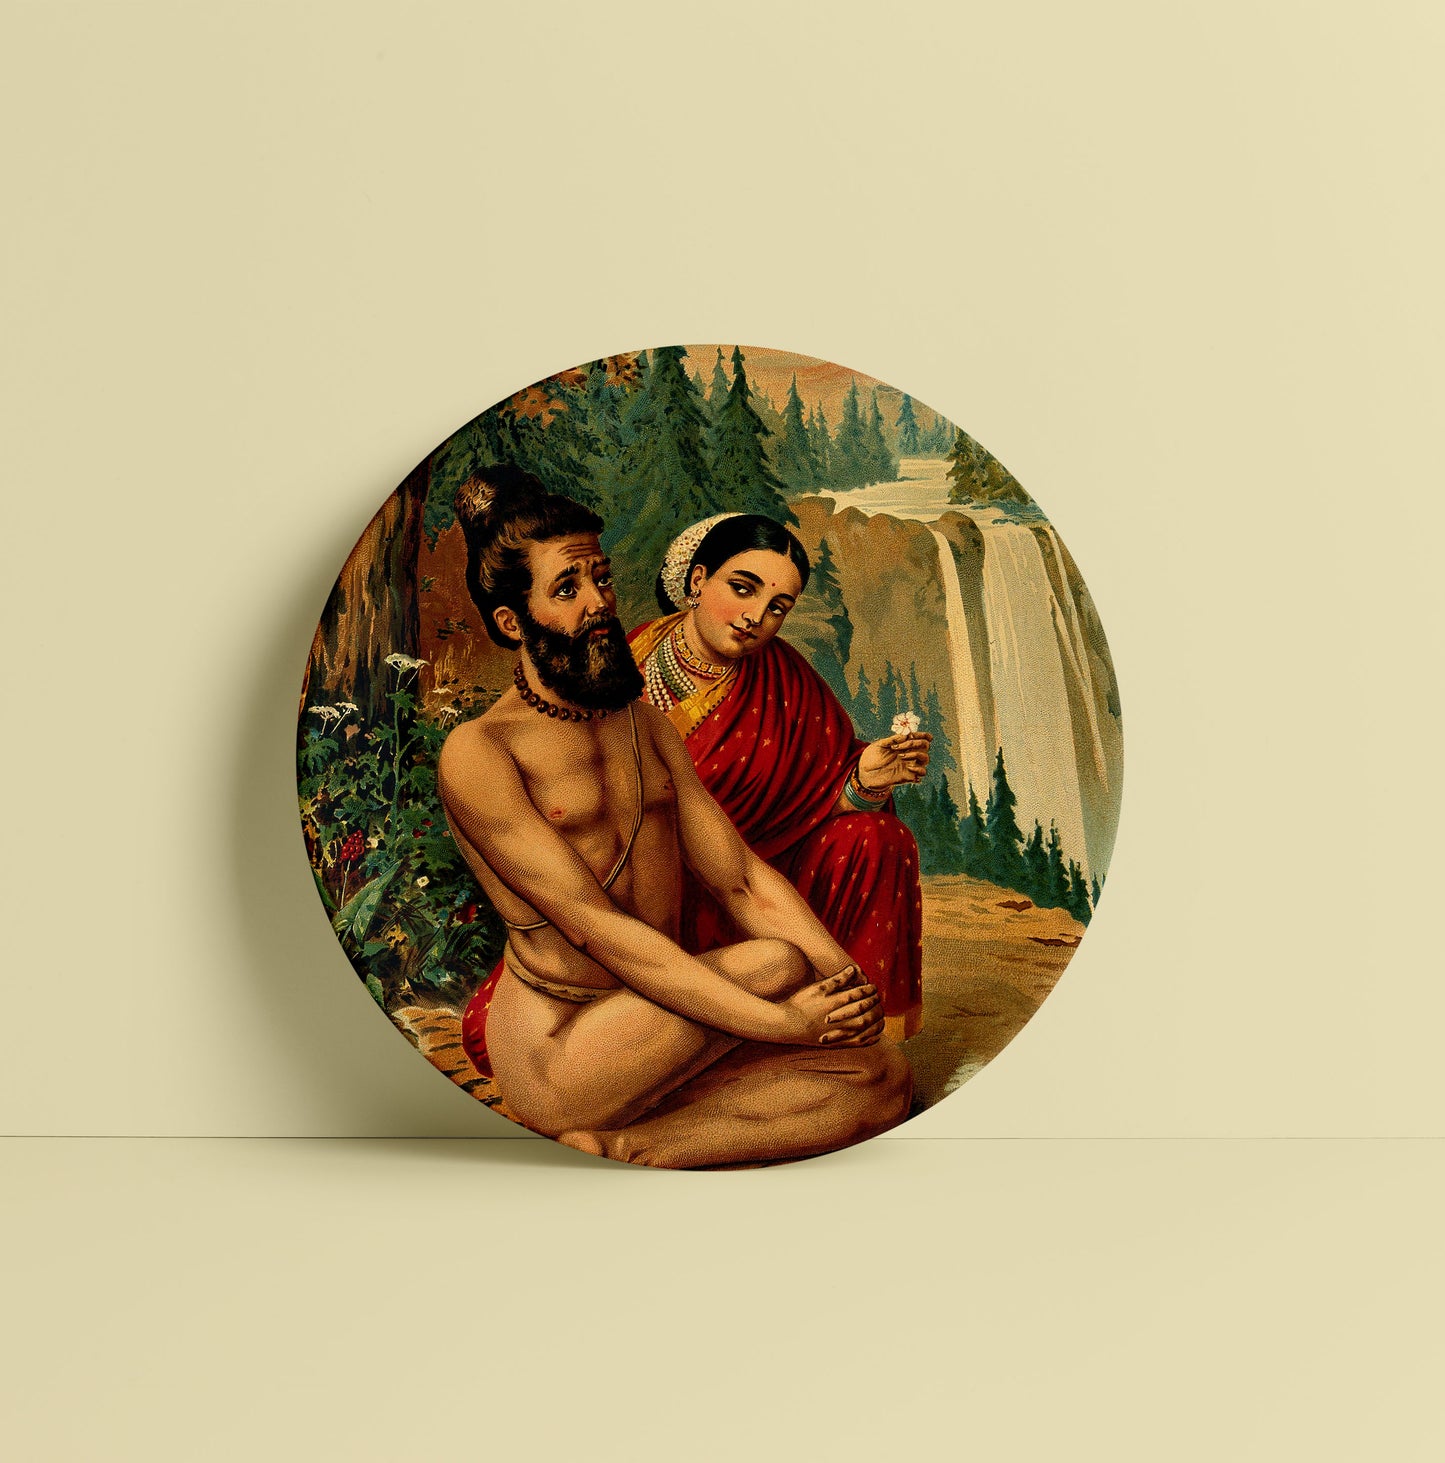 Menaka the nymph tempting the yogi, Vishwamitra by Ravi Varma Ceramic Plate for Home Decor